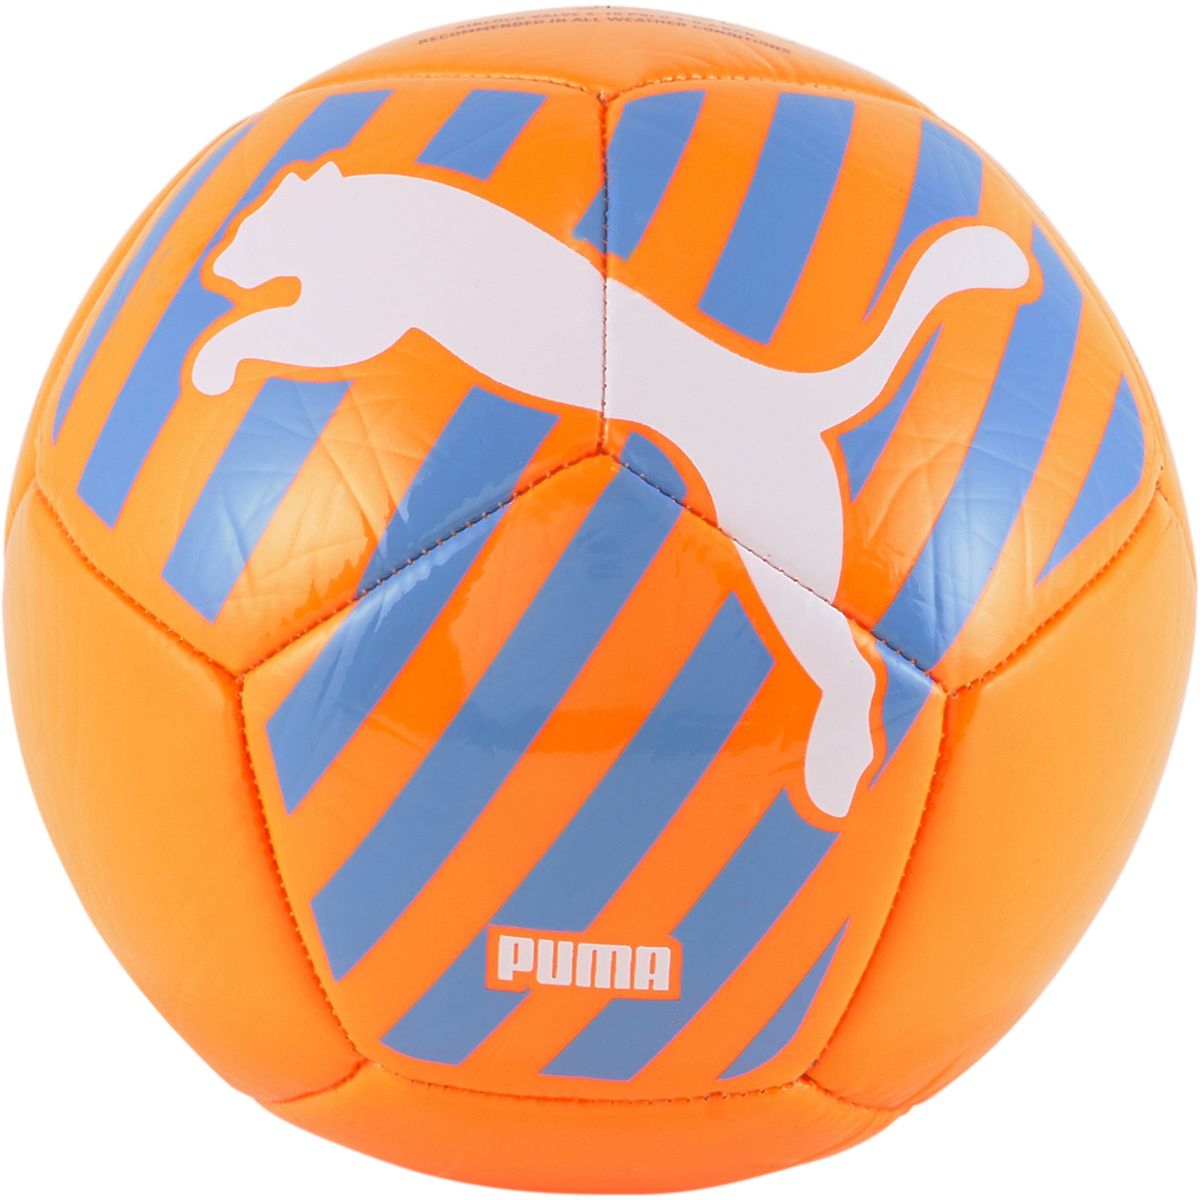 Puma Big Cat Miniball Outdoor-Fußball